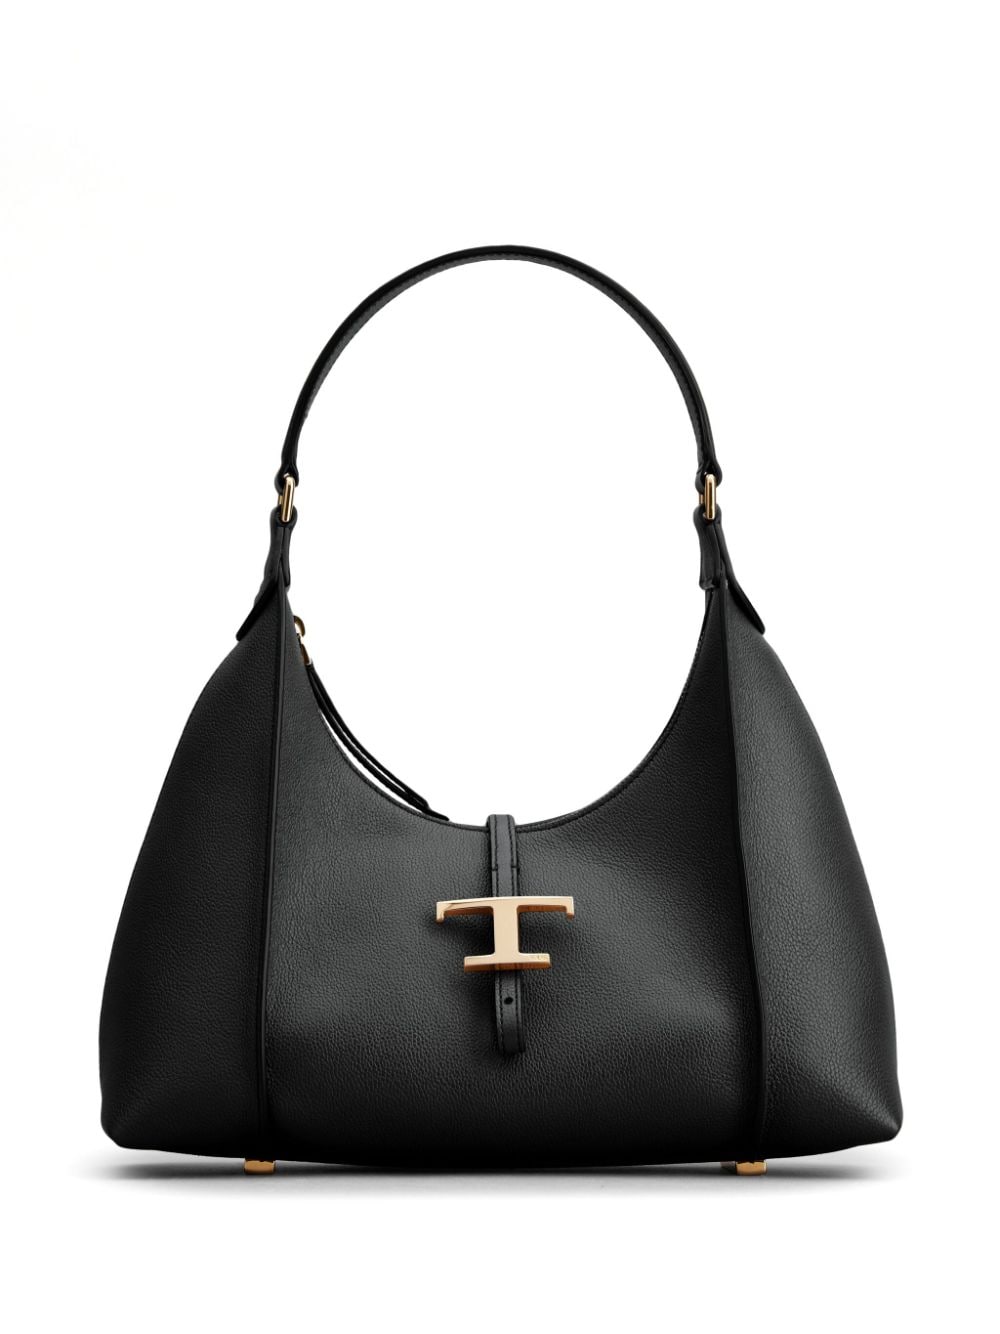 TOD'S Timeless Mini Hobo Shoulder Bag in Black Calfskin with T-Charm, 31x27x11cm